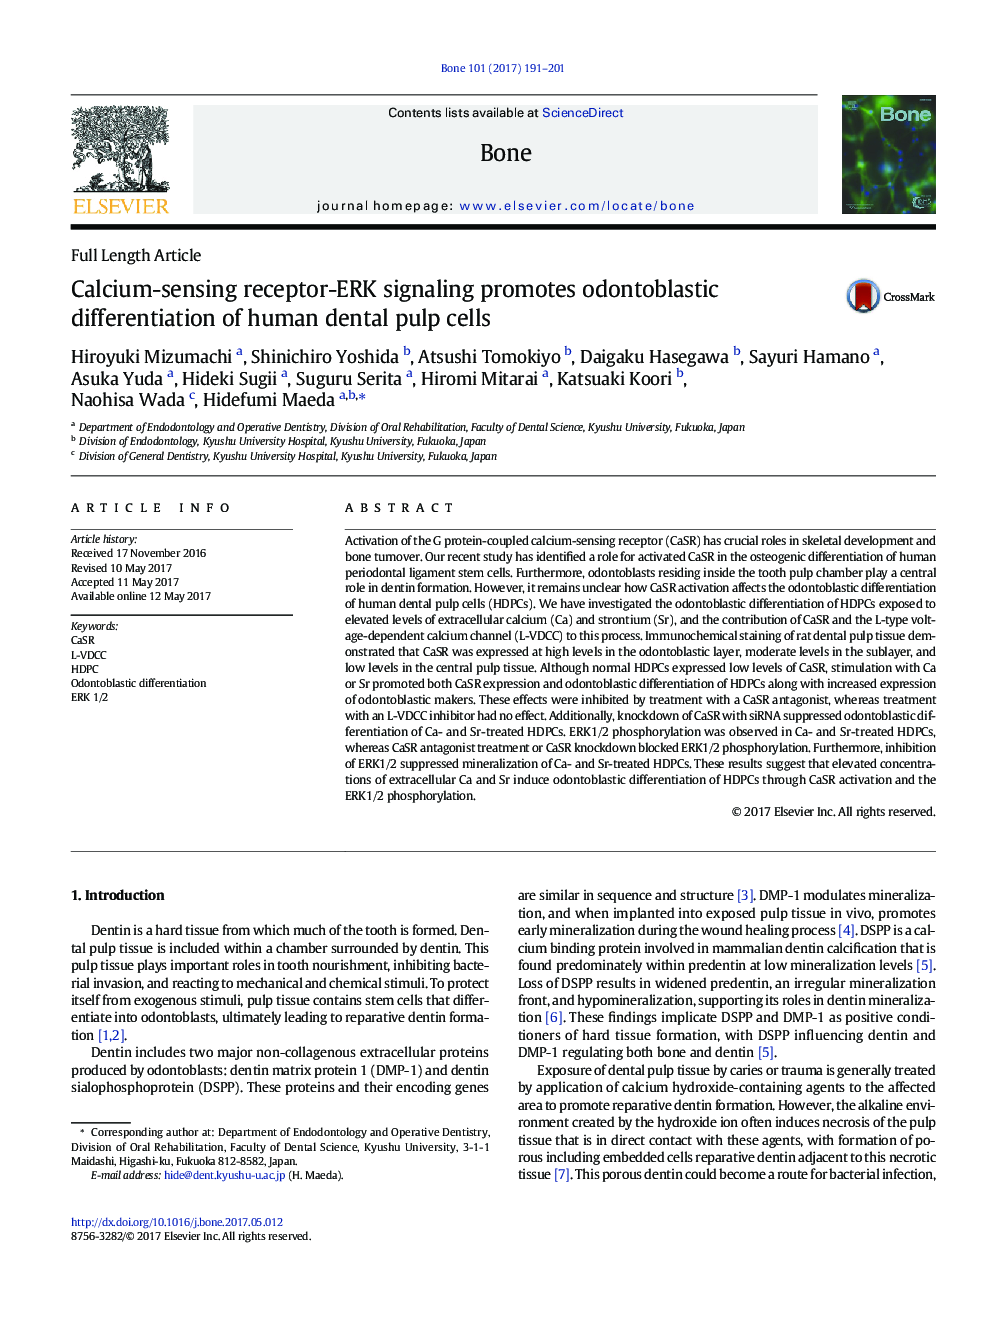 Full Length ArticleCalcium-sensing receptor-ERK signaling promotes odontoblastic differentiation of human dental pulp cells